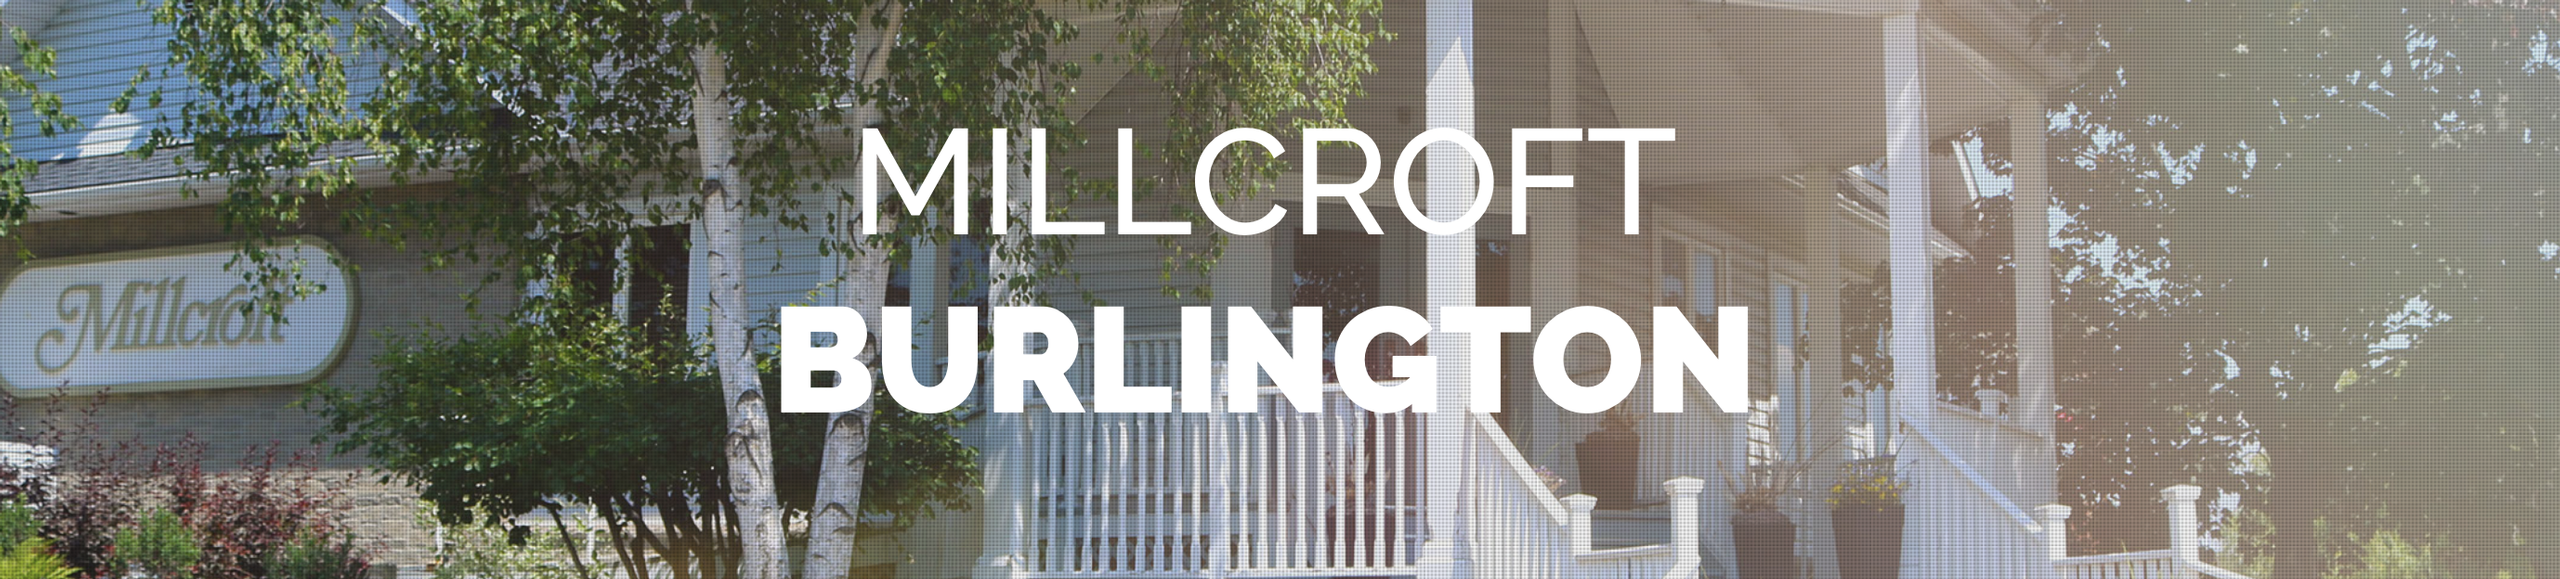 Explore Burlington - Millcroft neighbourhood with The Mink Group real estate.